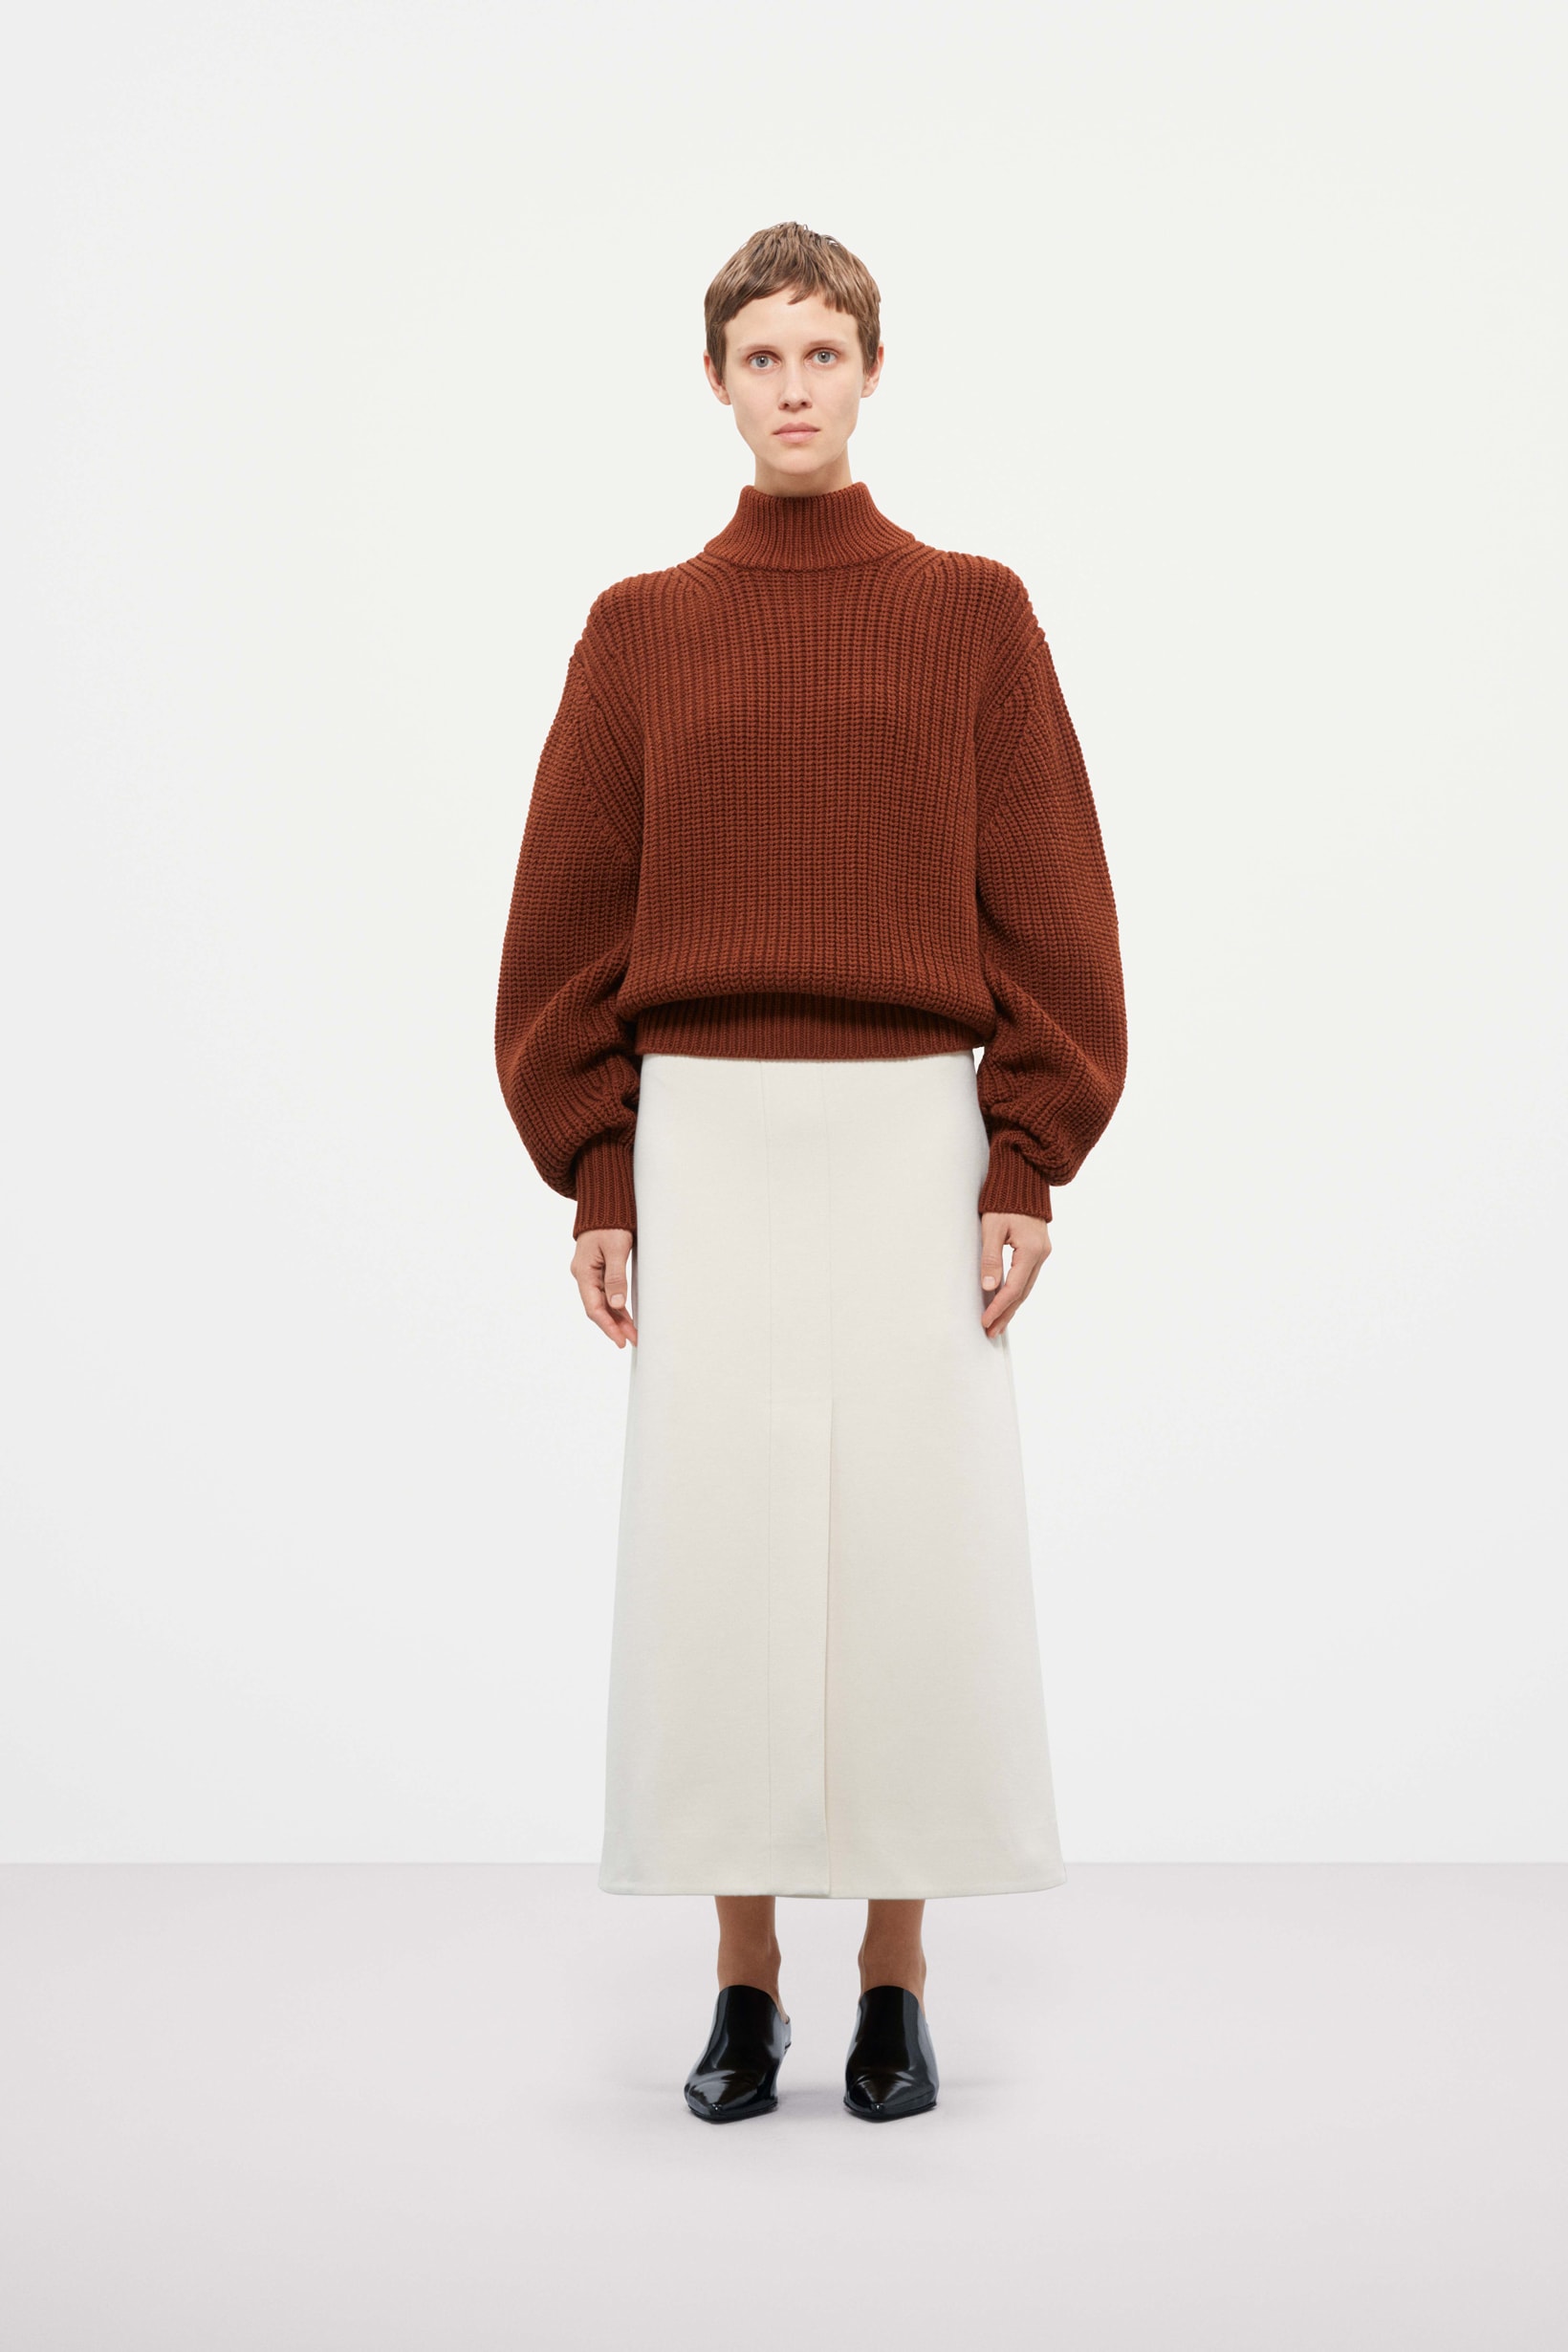 Cos Fall Winter 2019 Lookbook Sweater Orange Skirt Cream